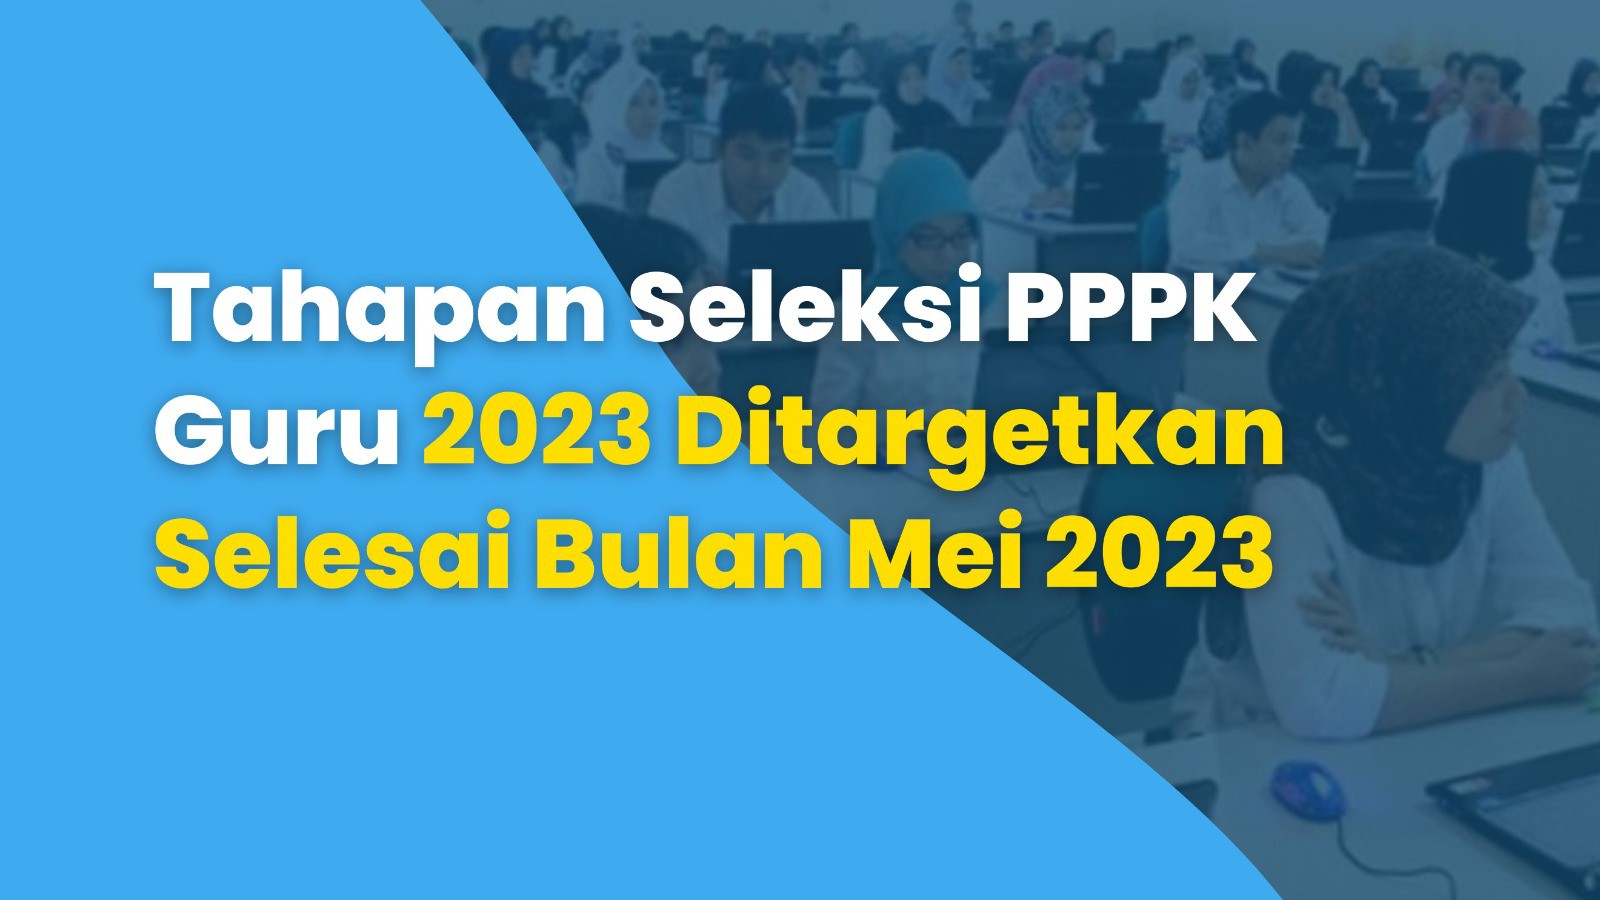 Tahapan Seleksi PPPK Guru 2023 Ditargetkan Selesai Bulan Mei 2023